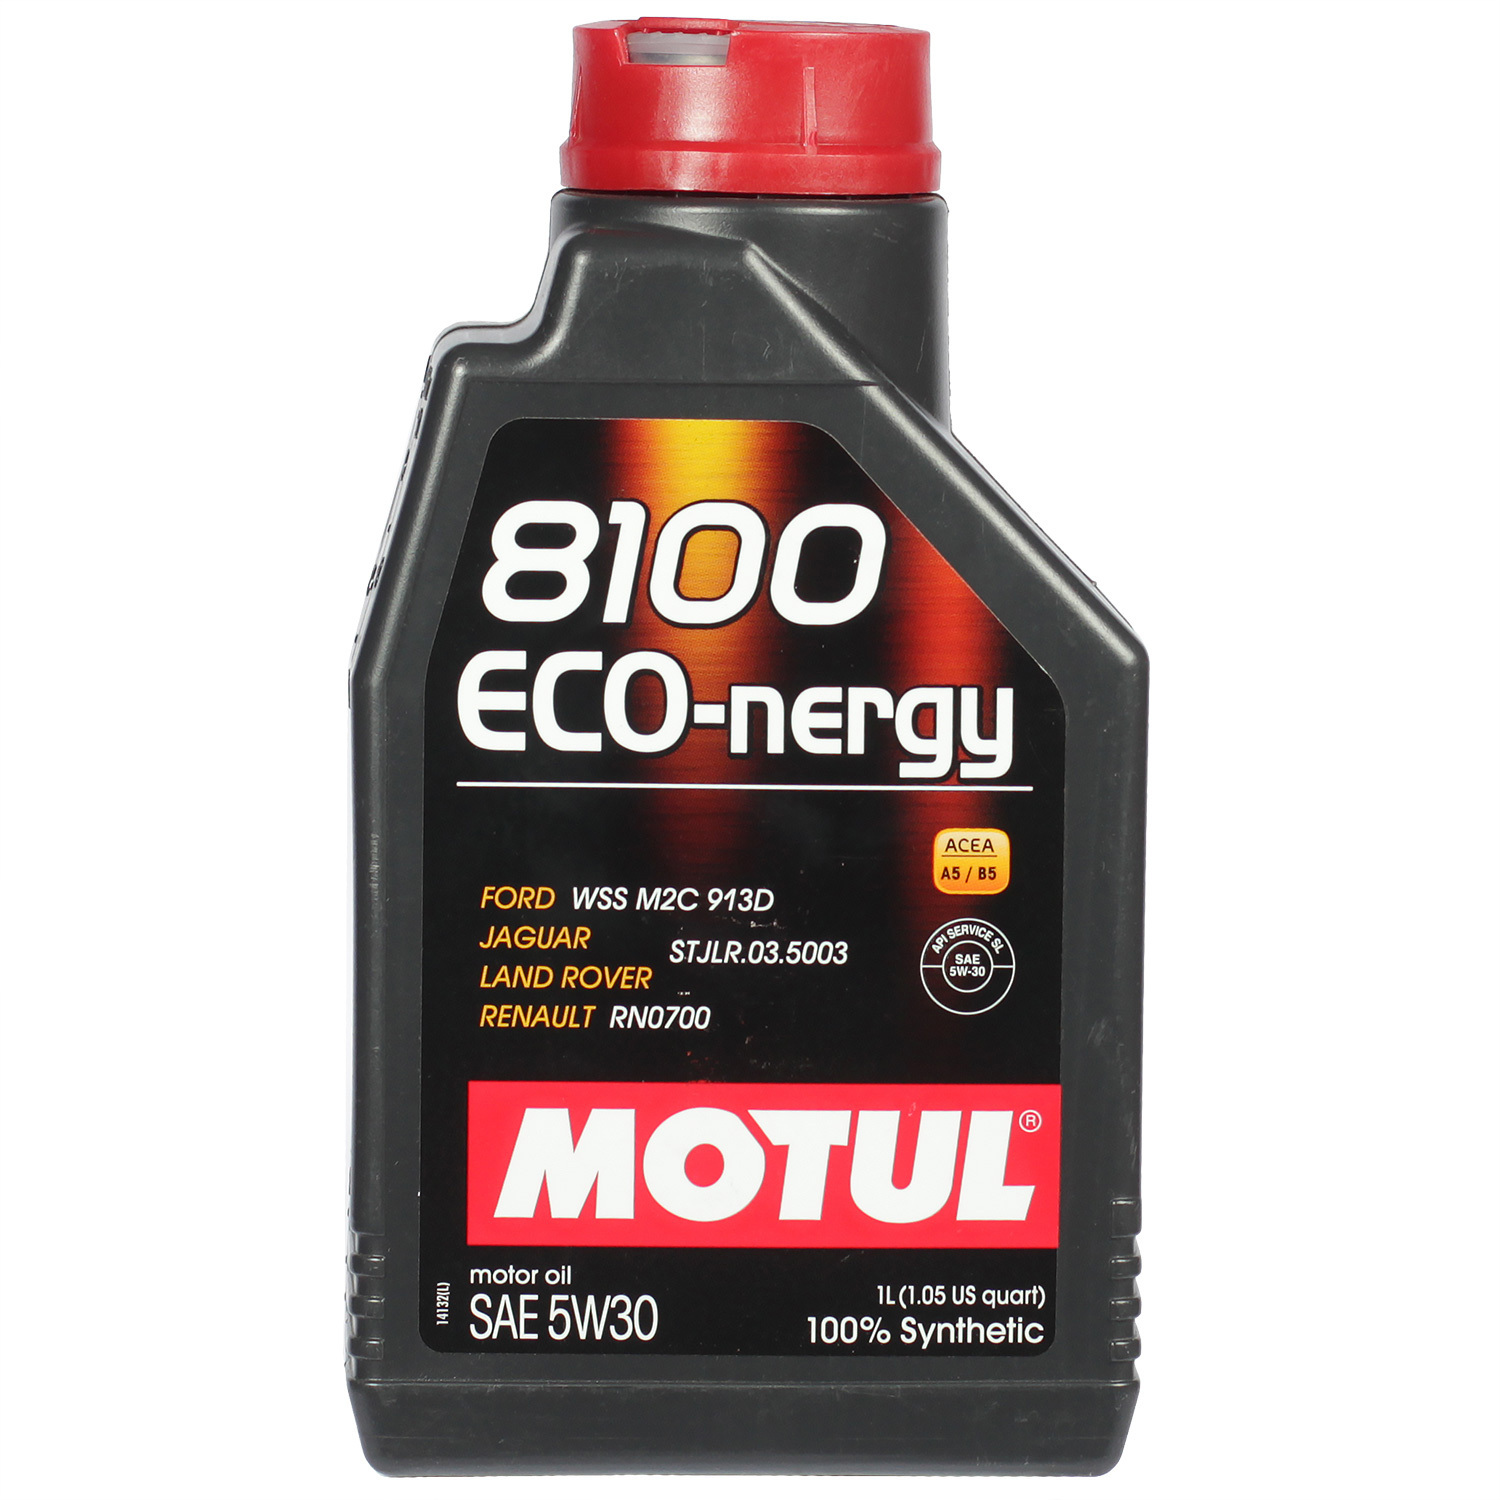 Motul Моторное масло Motul 8100 Eco-nergy 5W-30, 1 л motul моторное масло motul 8100 x cess 5w 40 60 л